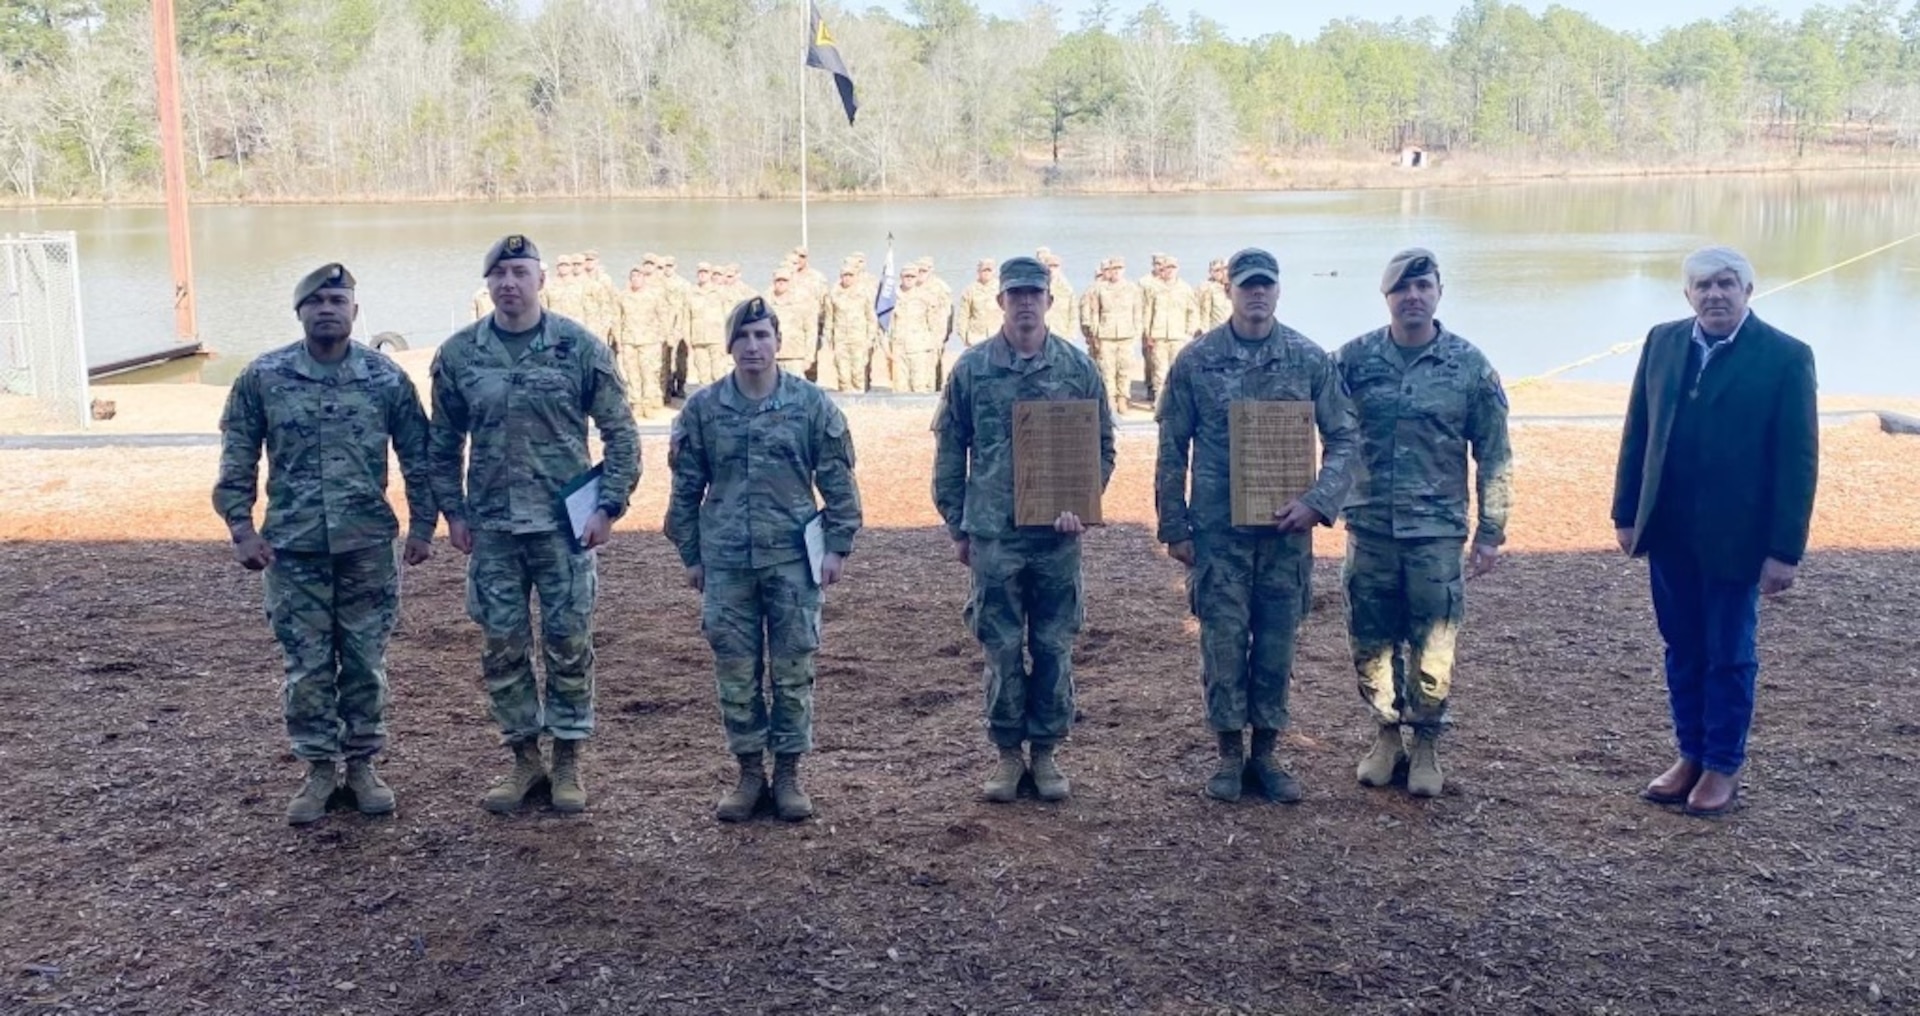 1116th NCO named top enlisted graduate at Ranger School > Virginia